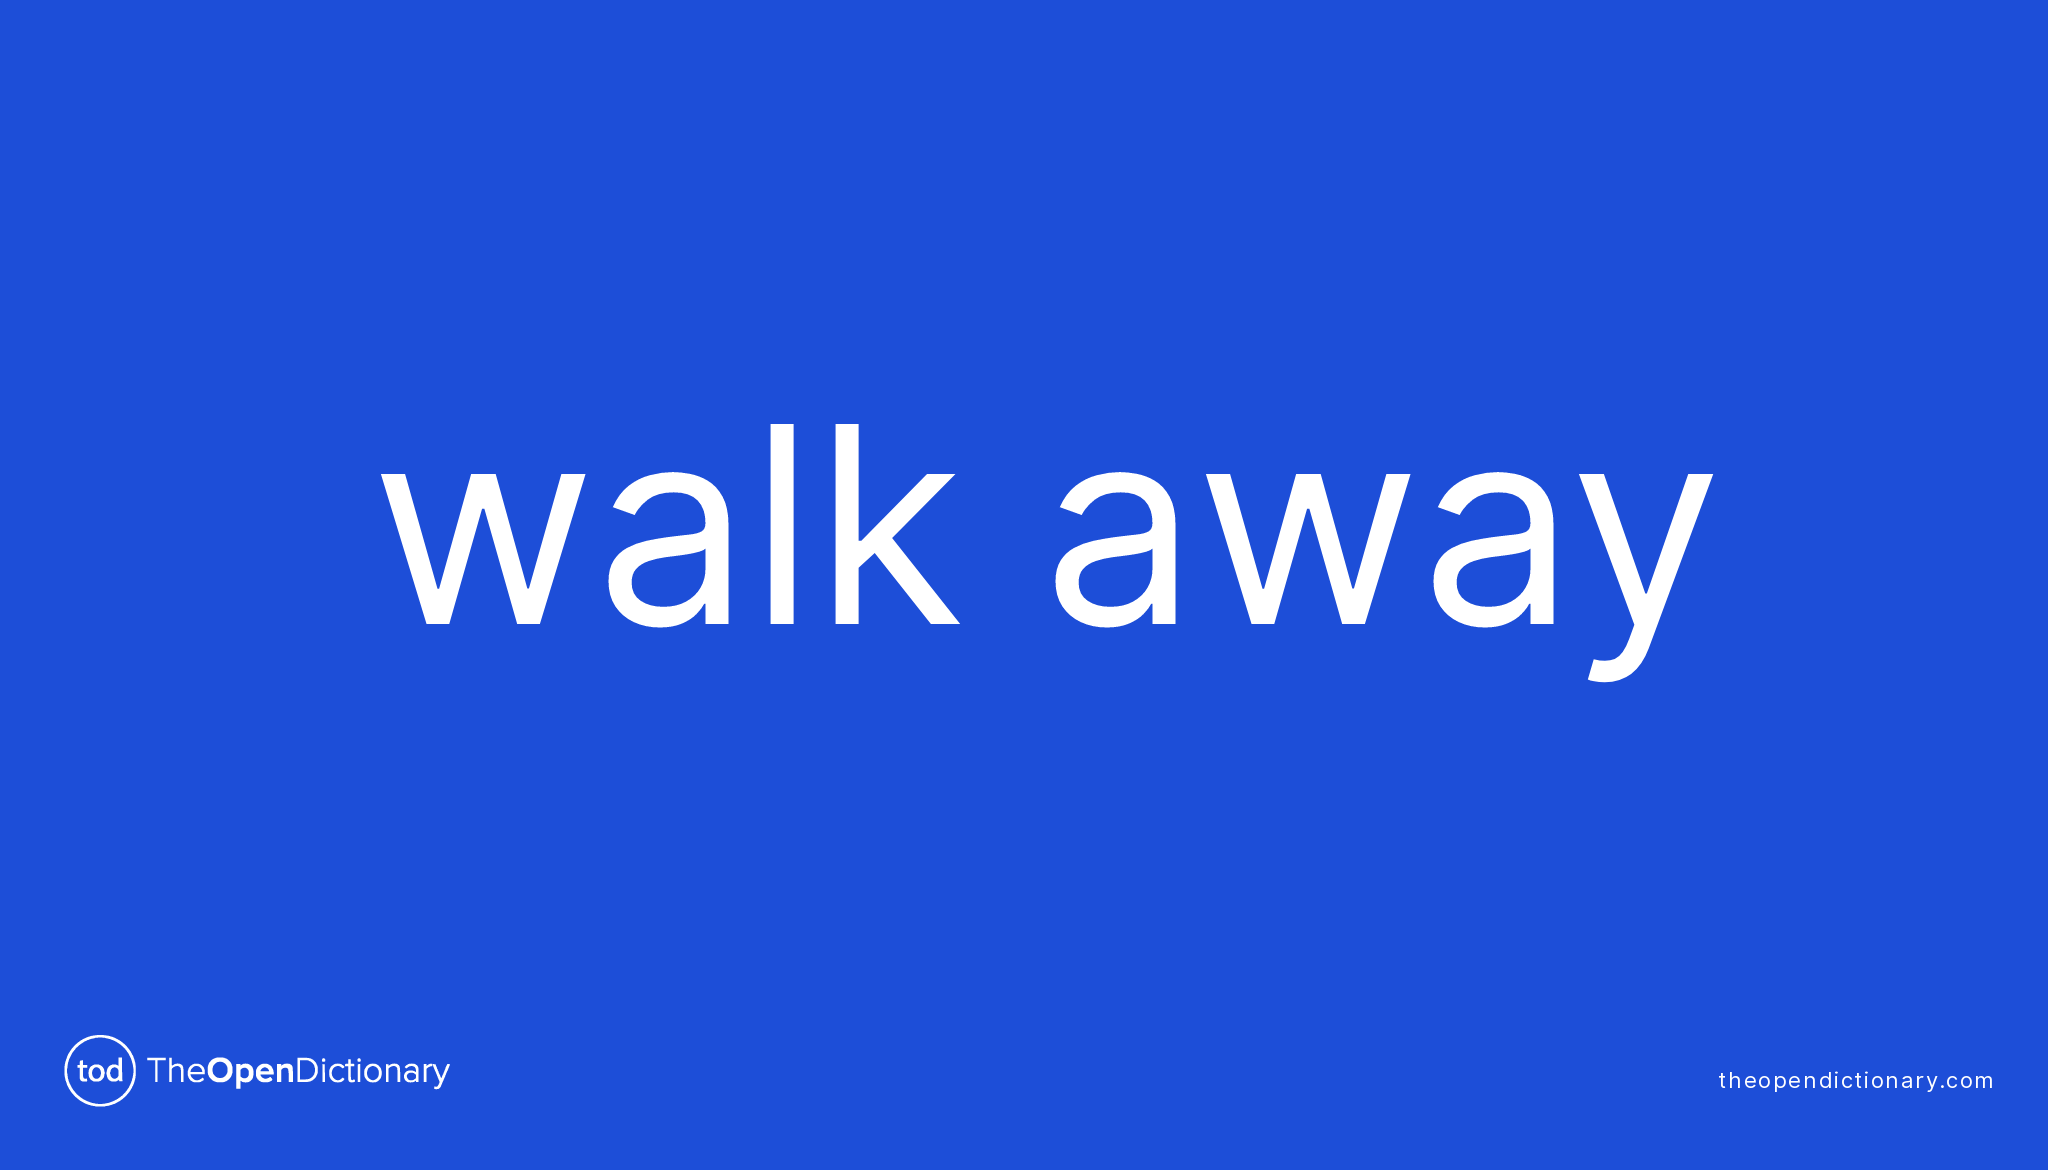 walk away trip meaning